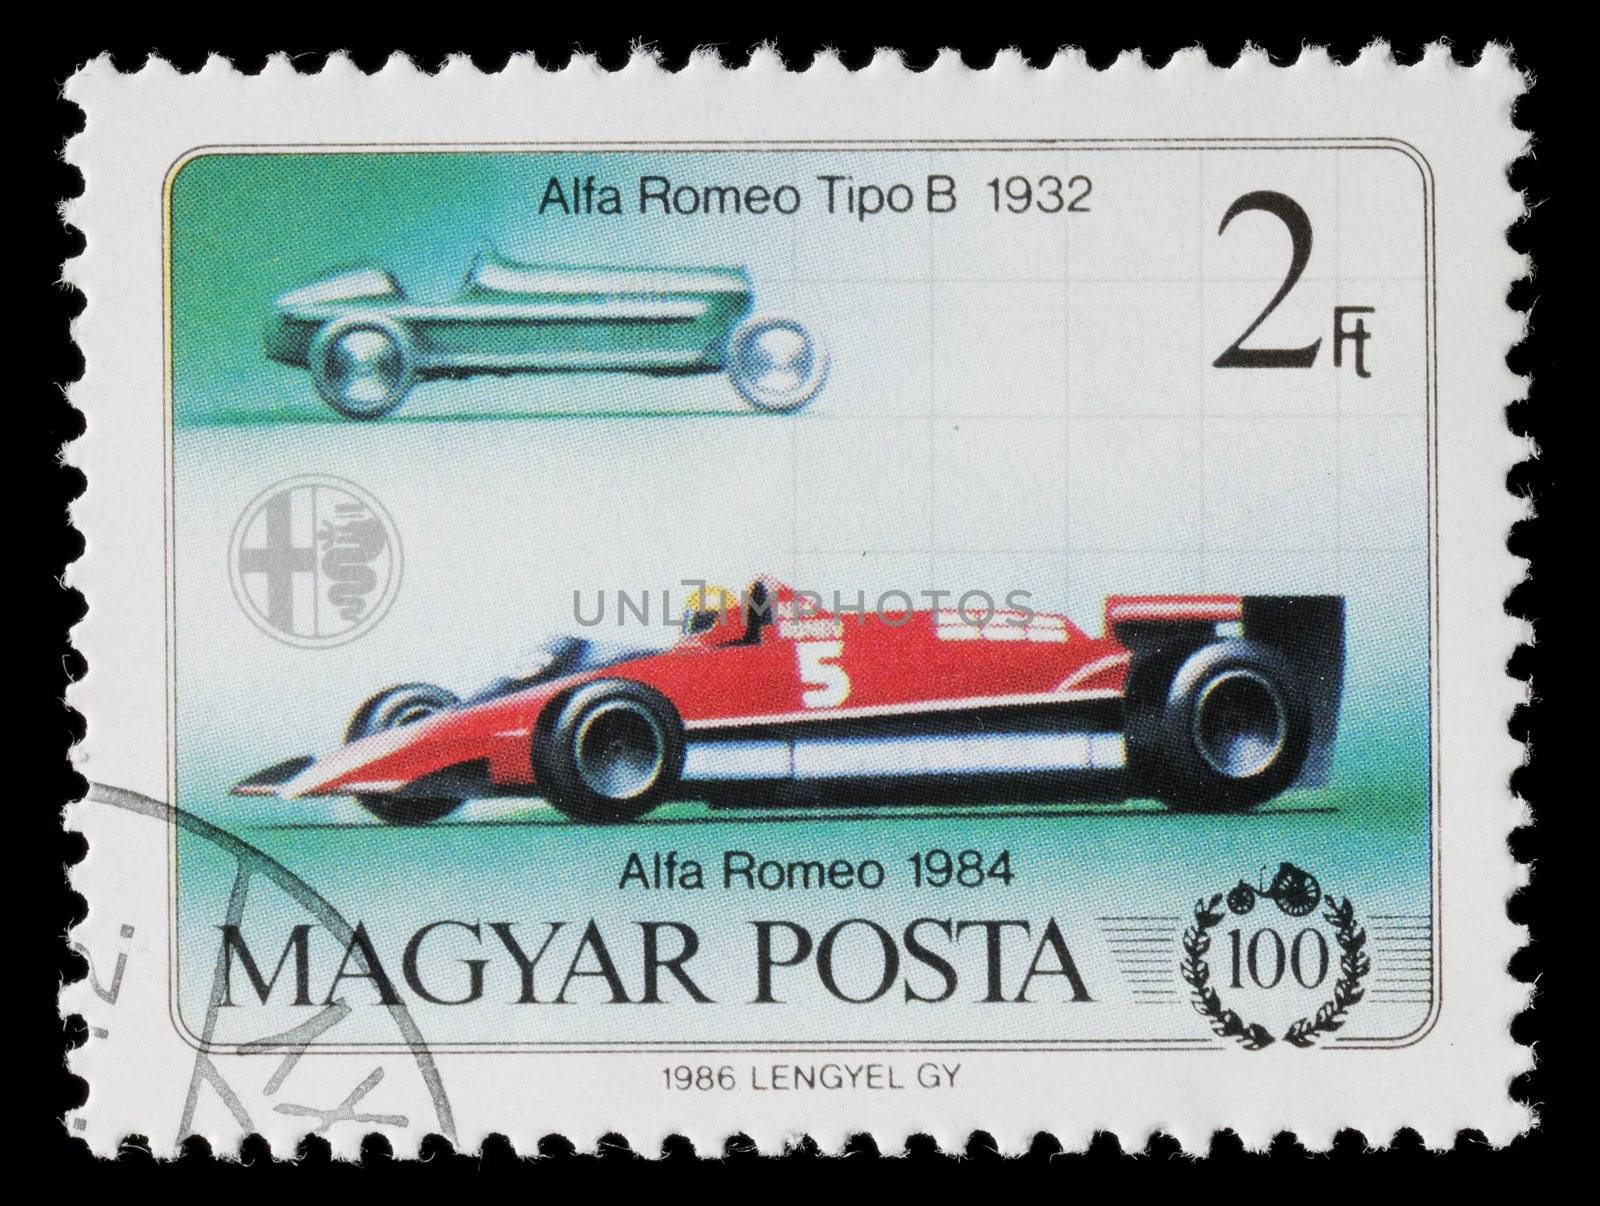 Alfa Romeo Stamp by Stocksnapper